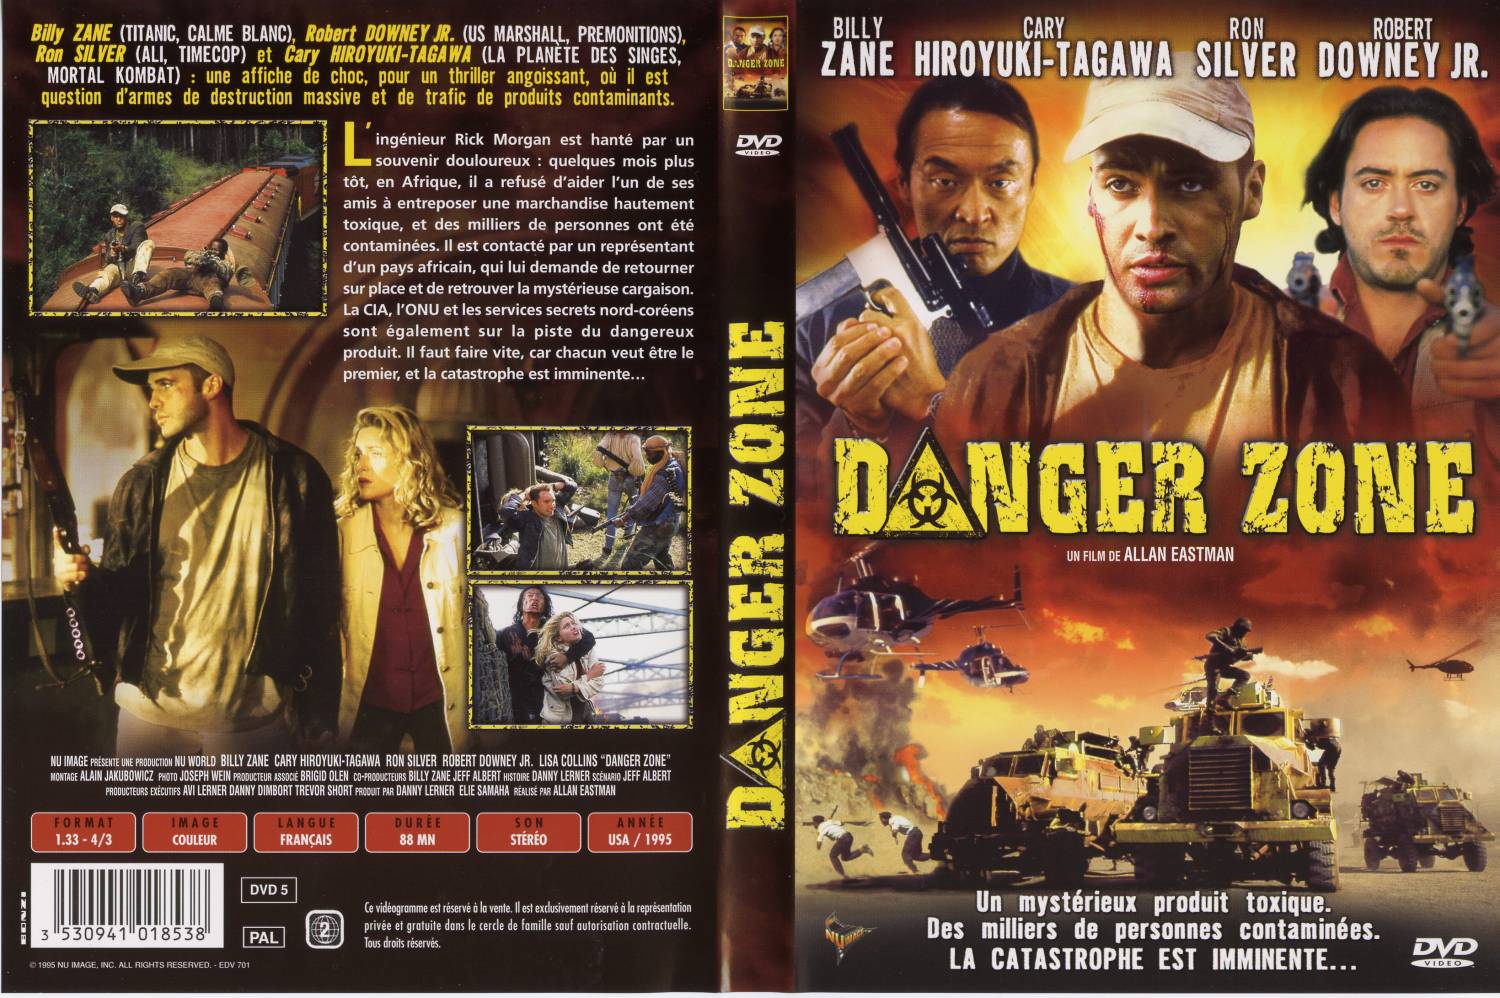 Jaquette DVD Danger zone